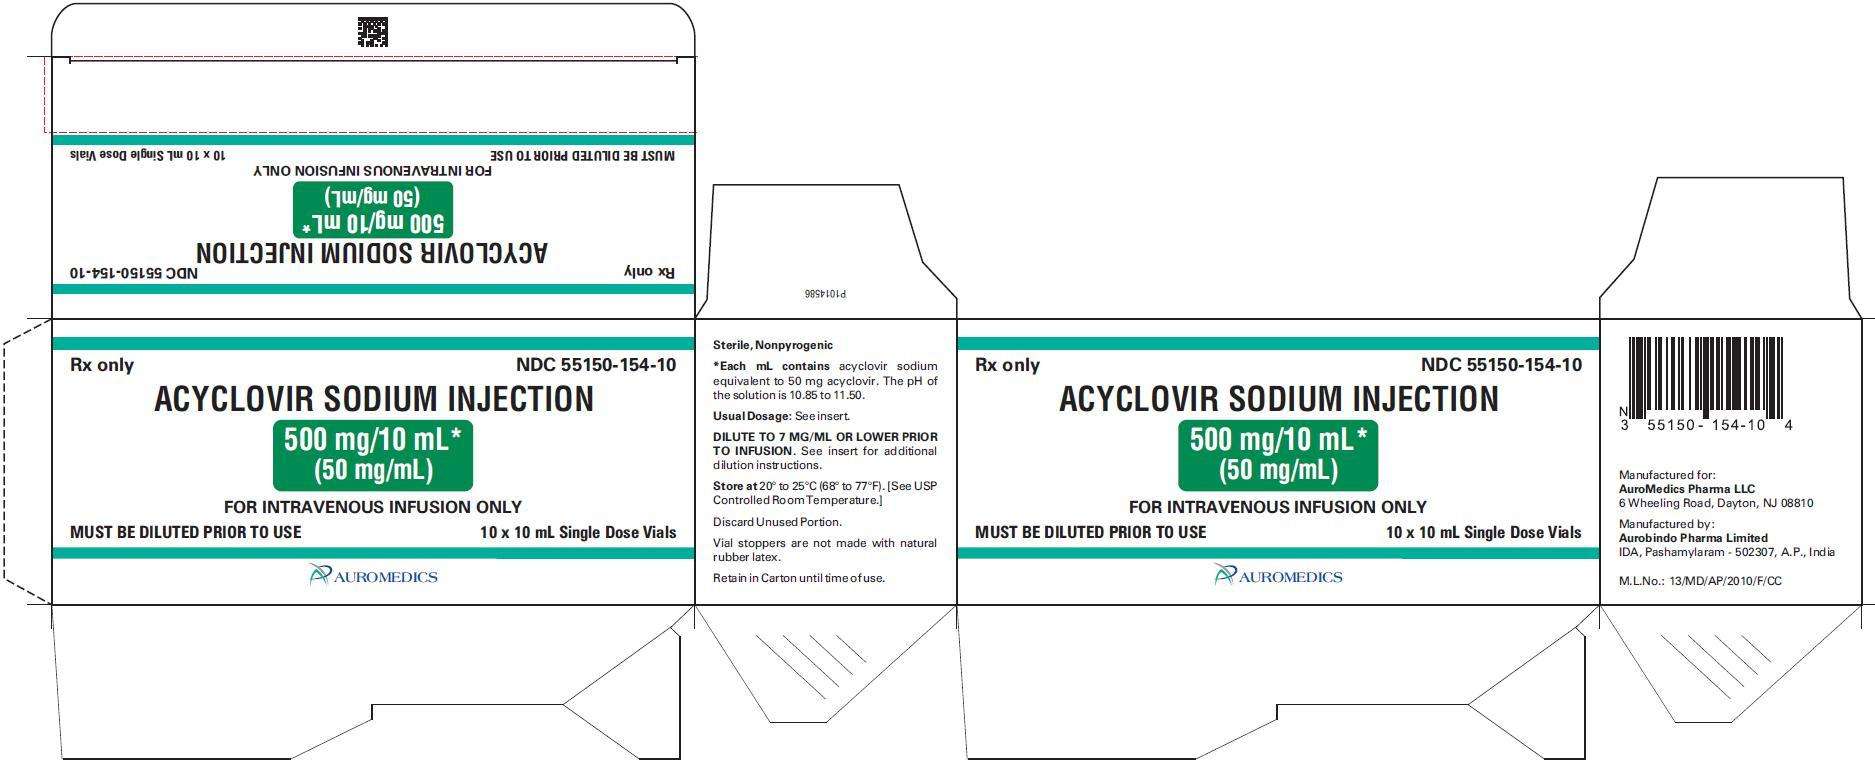 Acyclovir Sodium